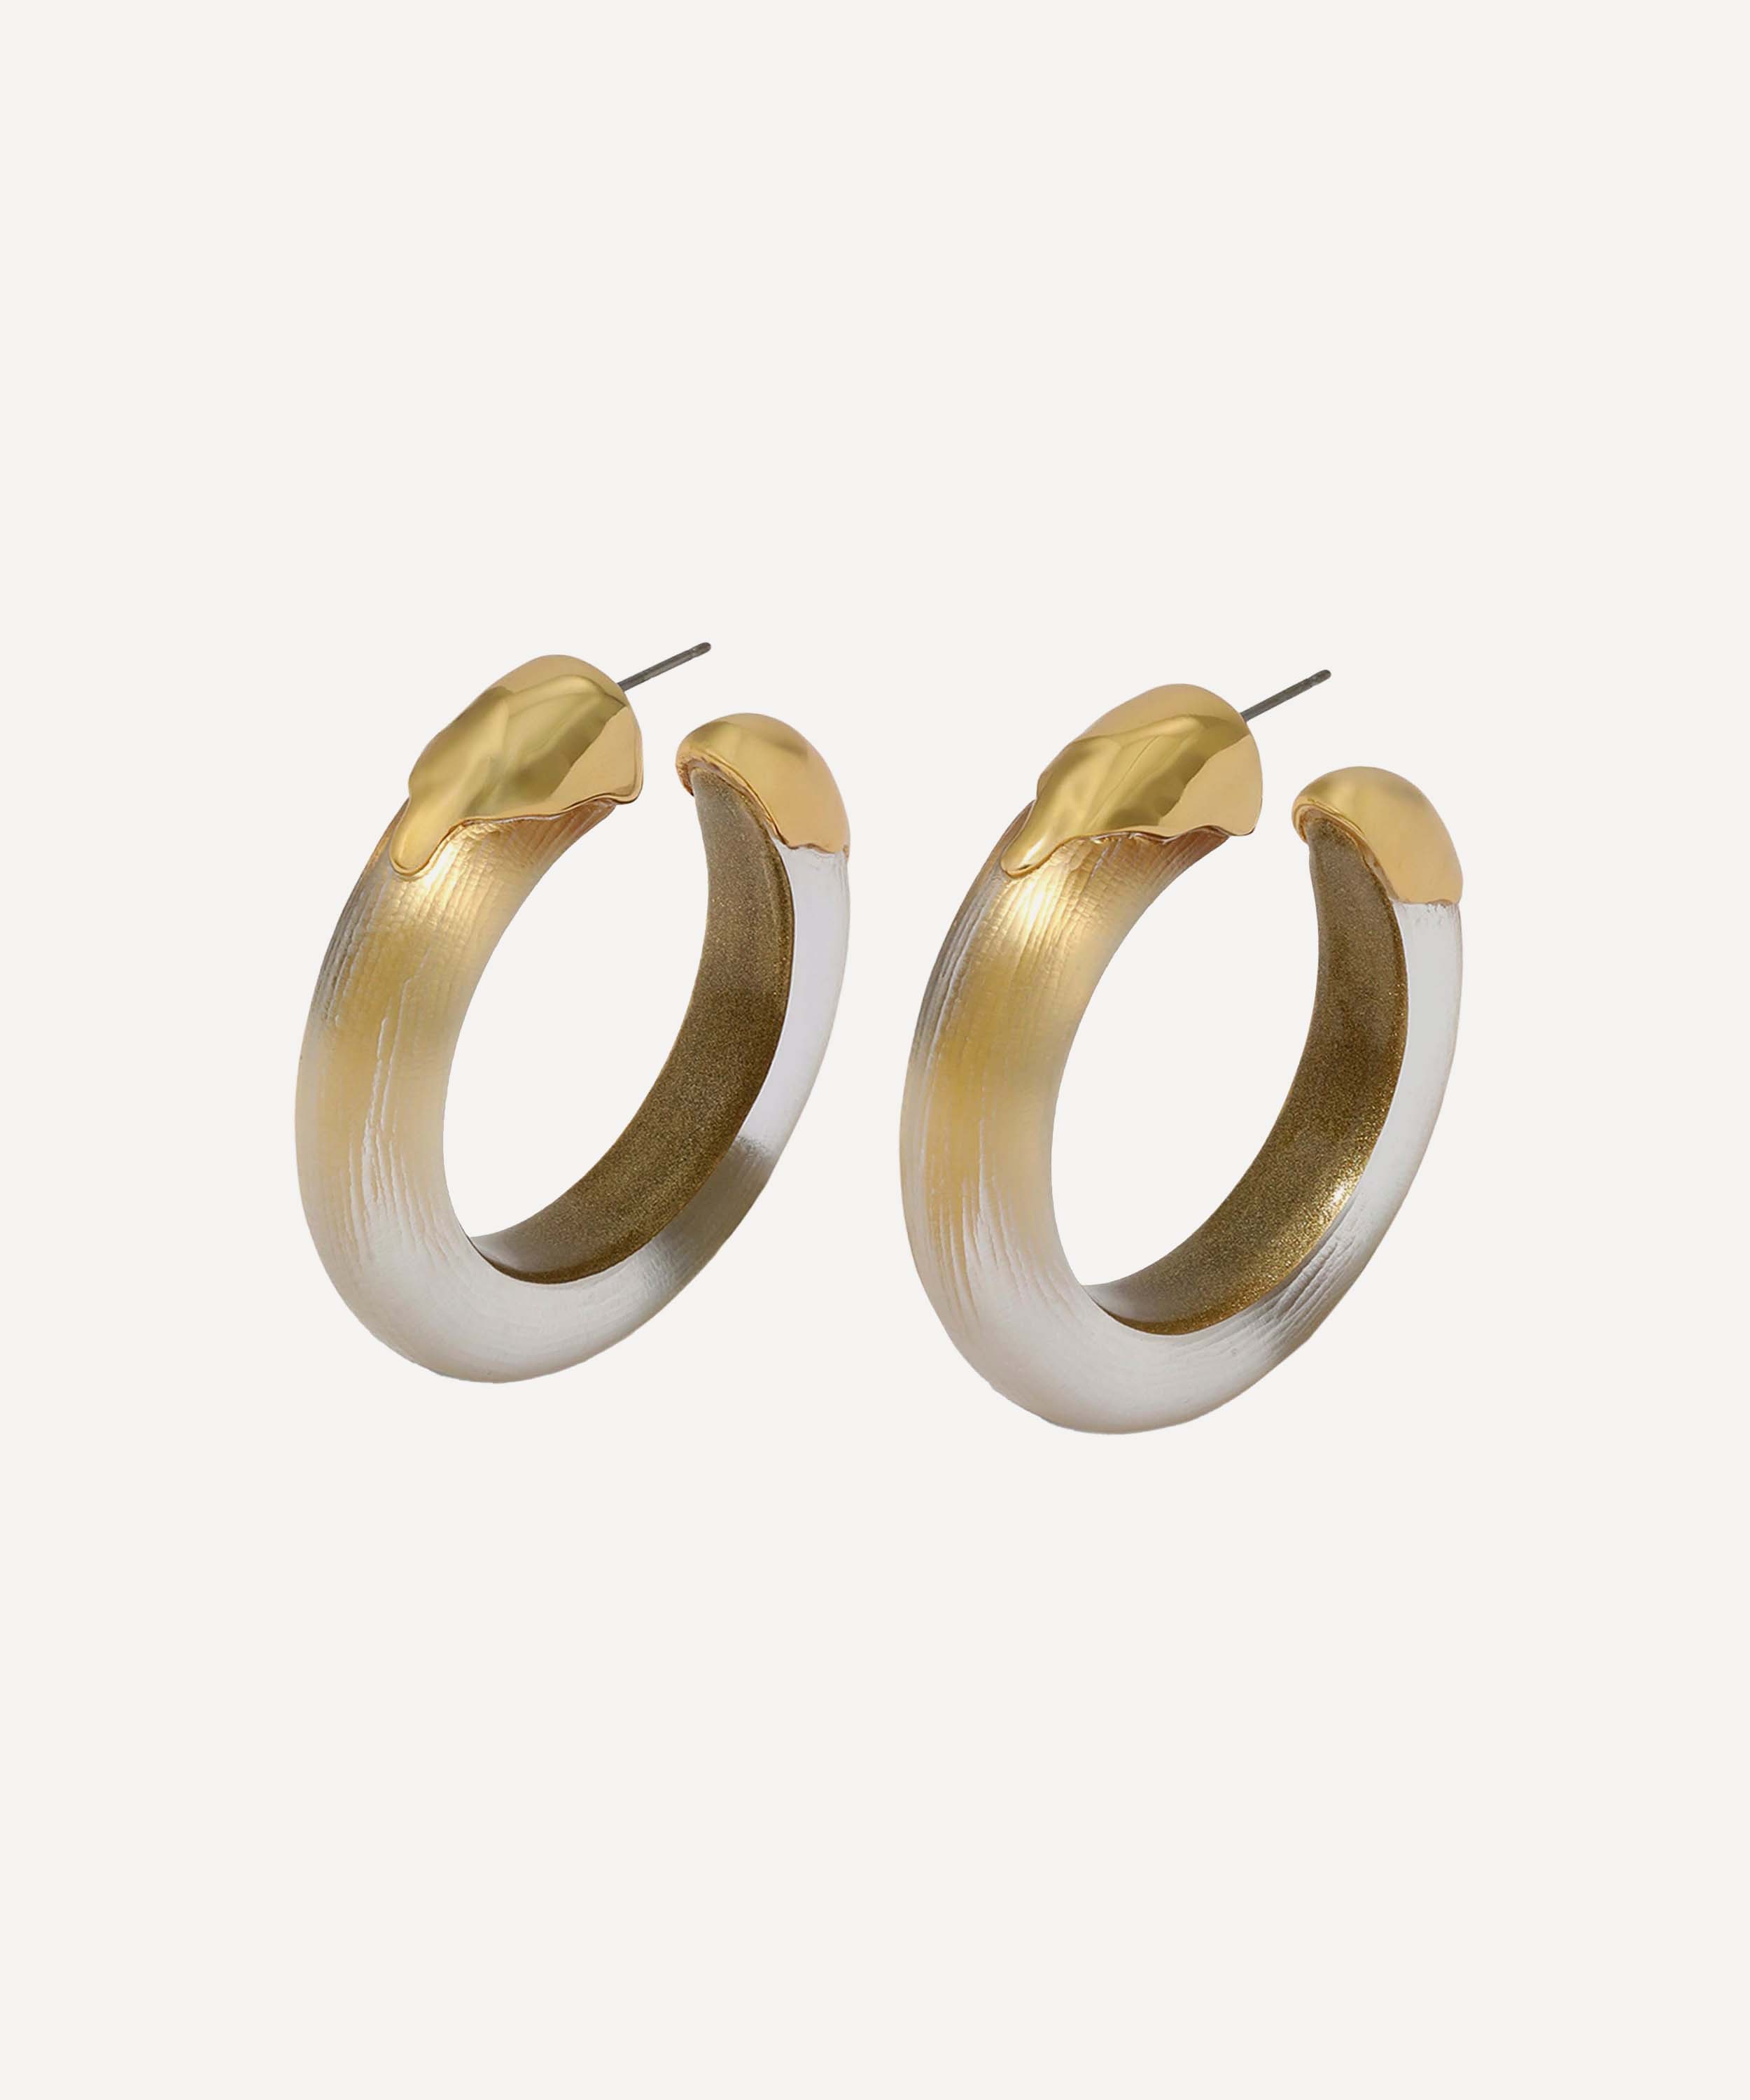 Alexis Bittar - 14ct Gold-Plated Luminous Lucite Hoop Earrings